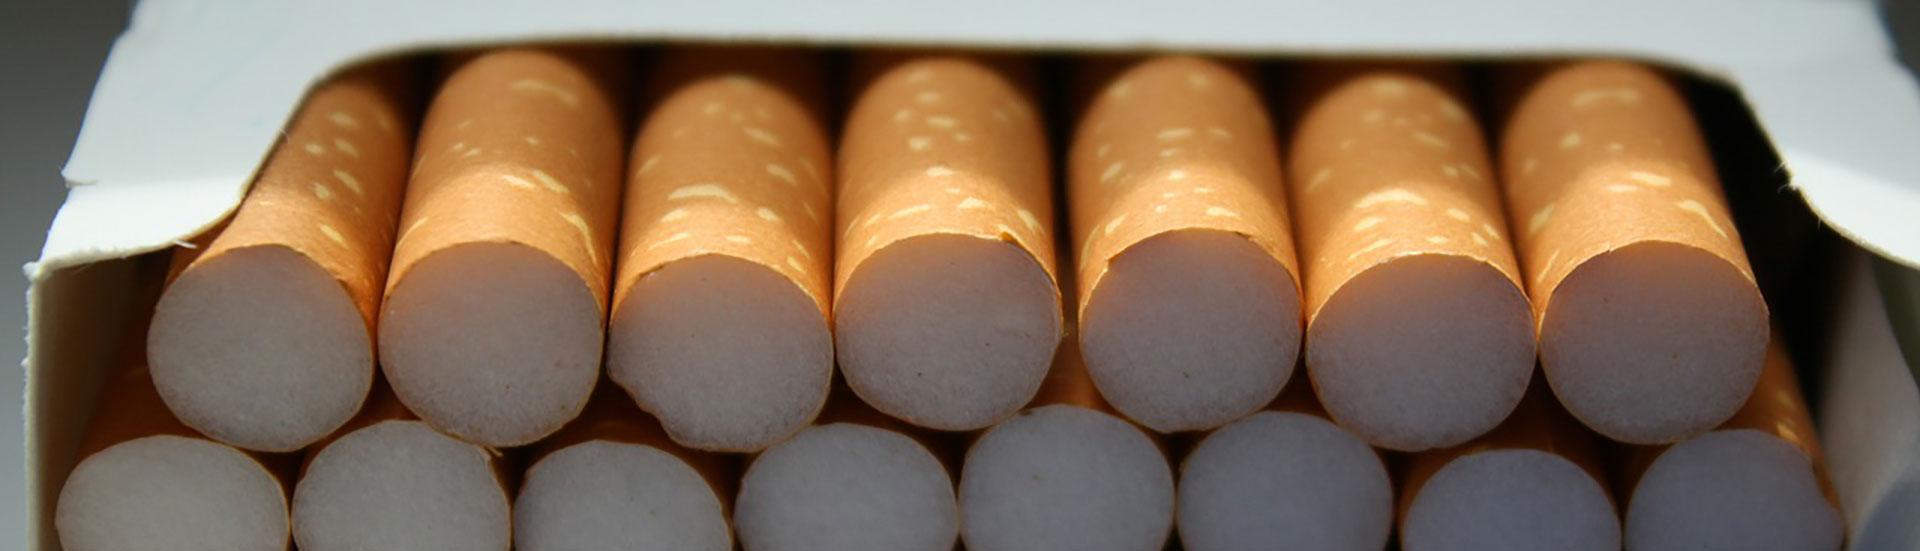 England to ban Branding of Cigarette packs